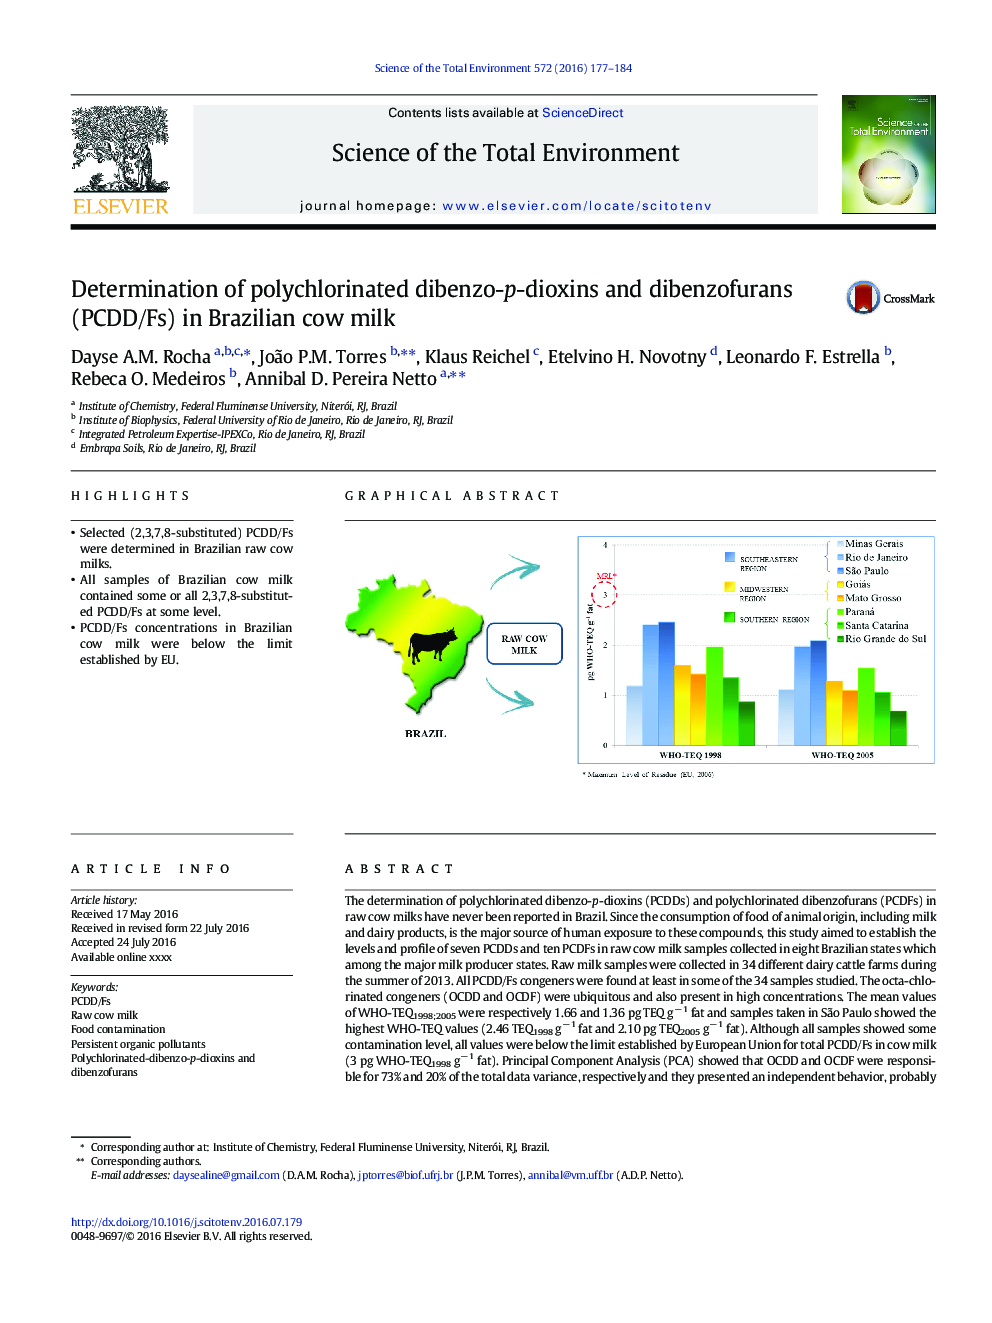 Determination of polychlorinated dibenzo-p-dioxins and dibenzofurans (PCDD/Fs) in Brazilian cow milk